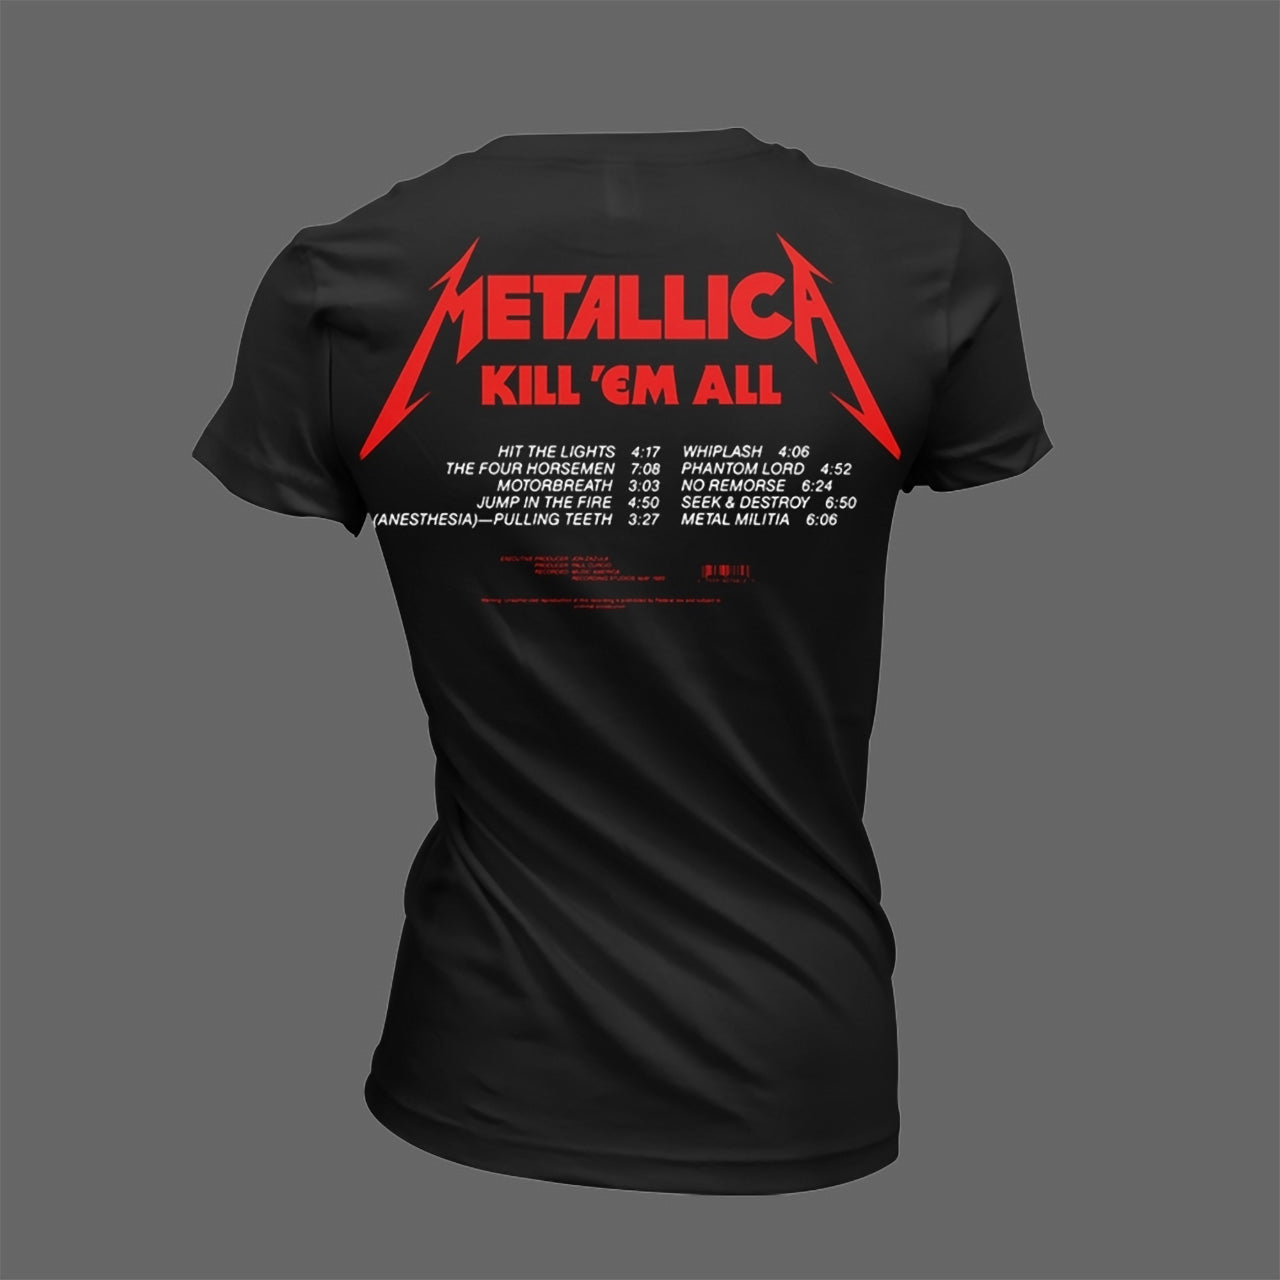 Metallica - Kill 'Em All (Women's T-Shirt)